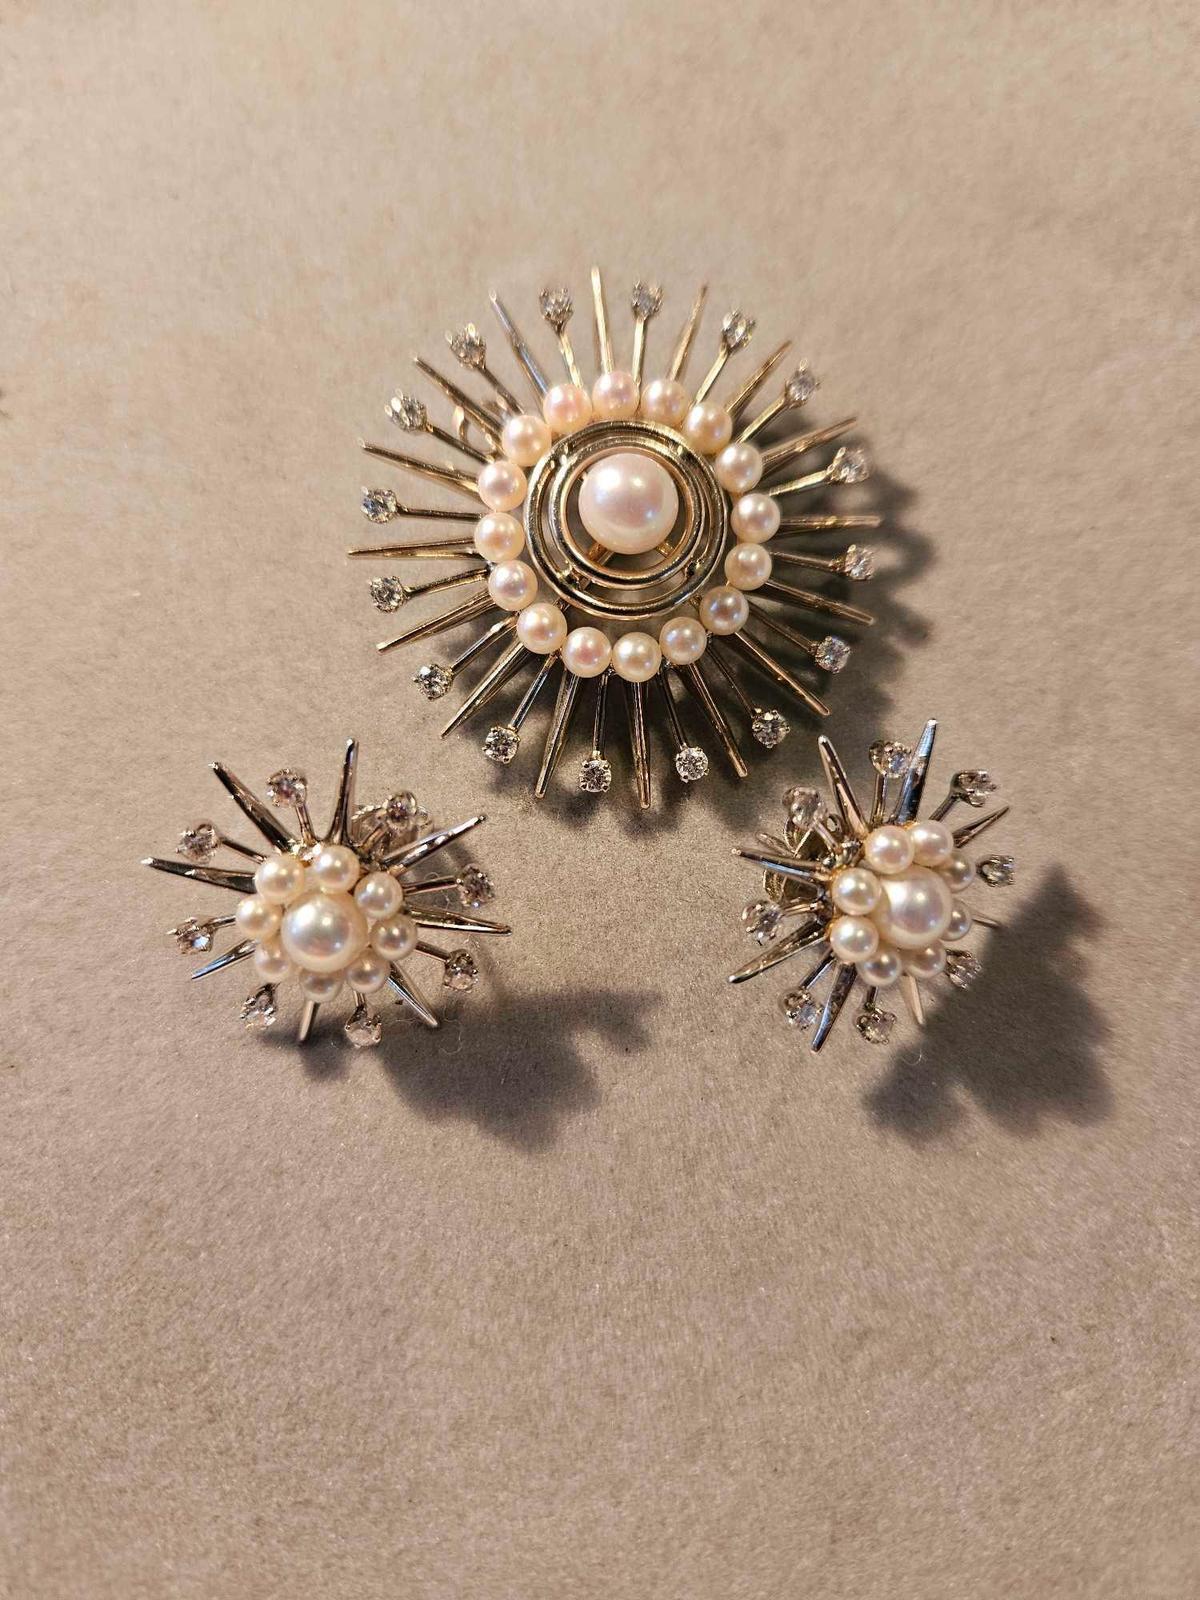 Lady's 14k white gold sunburst style pin/pendant and earring set